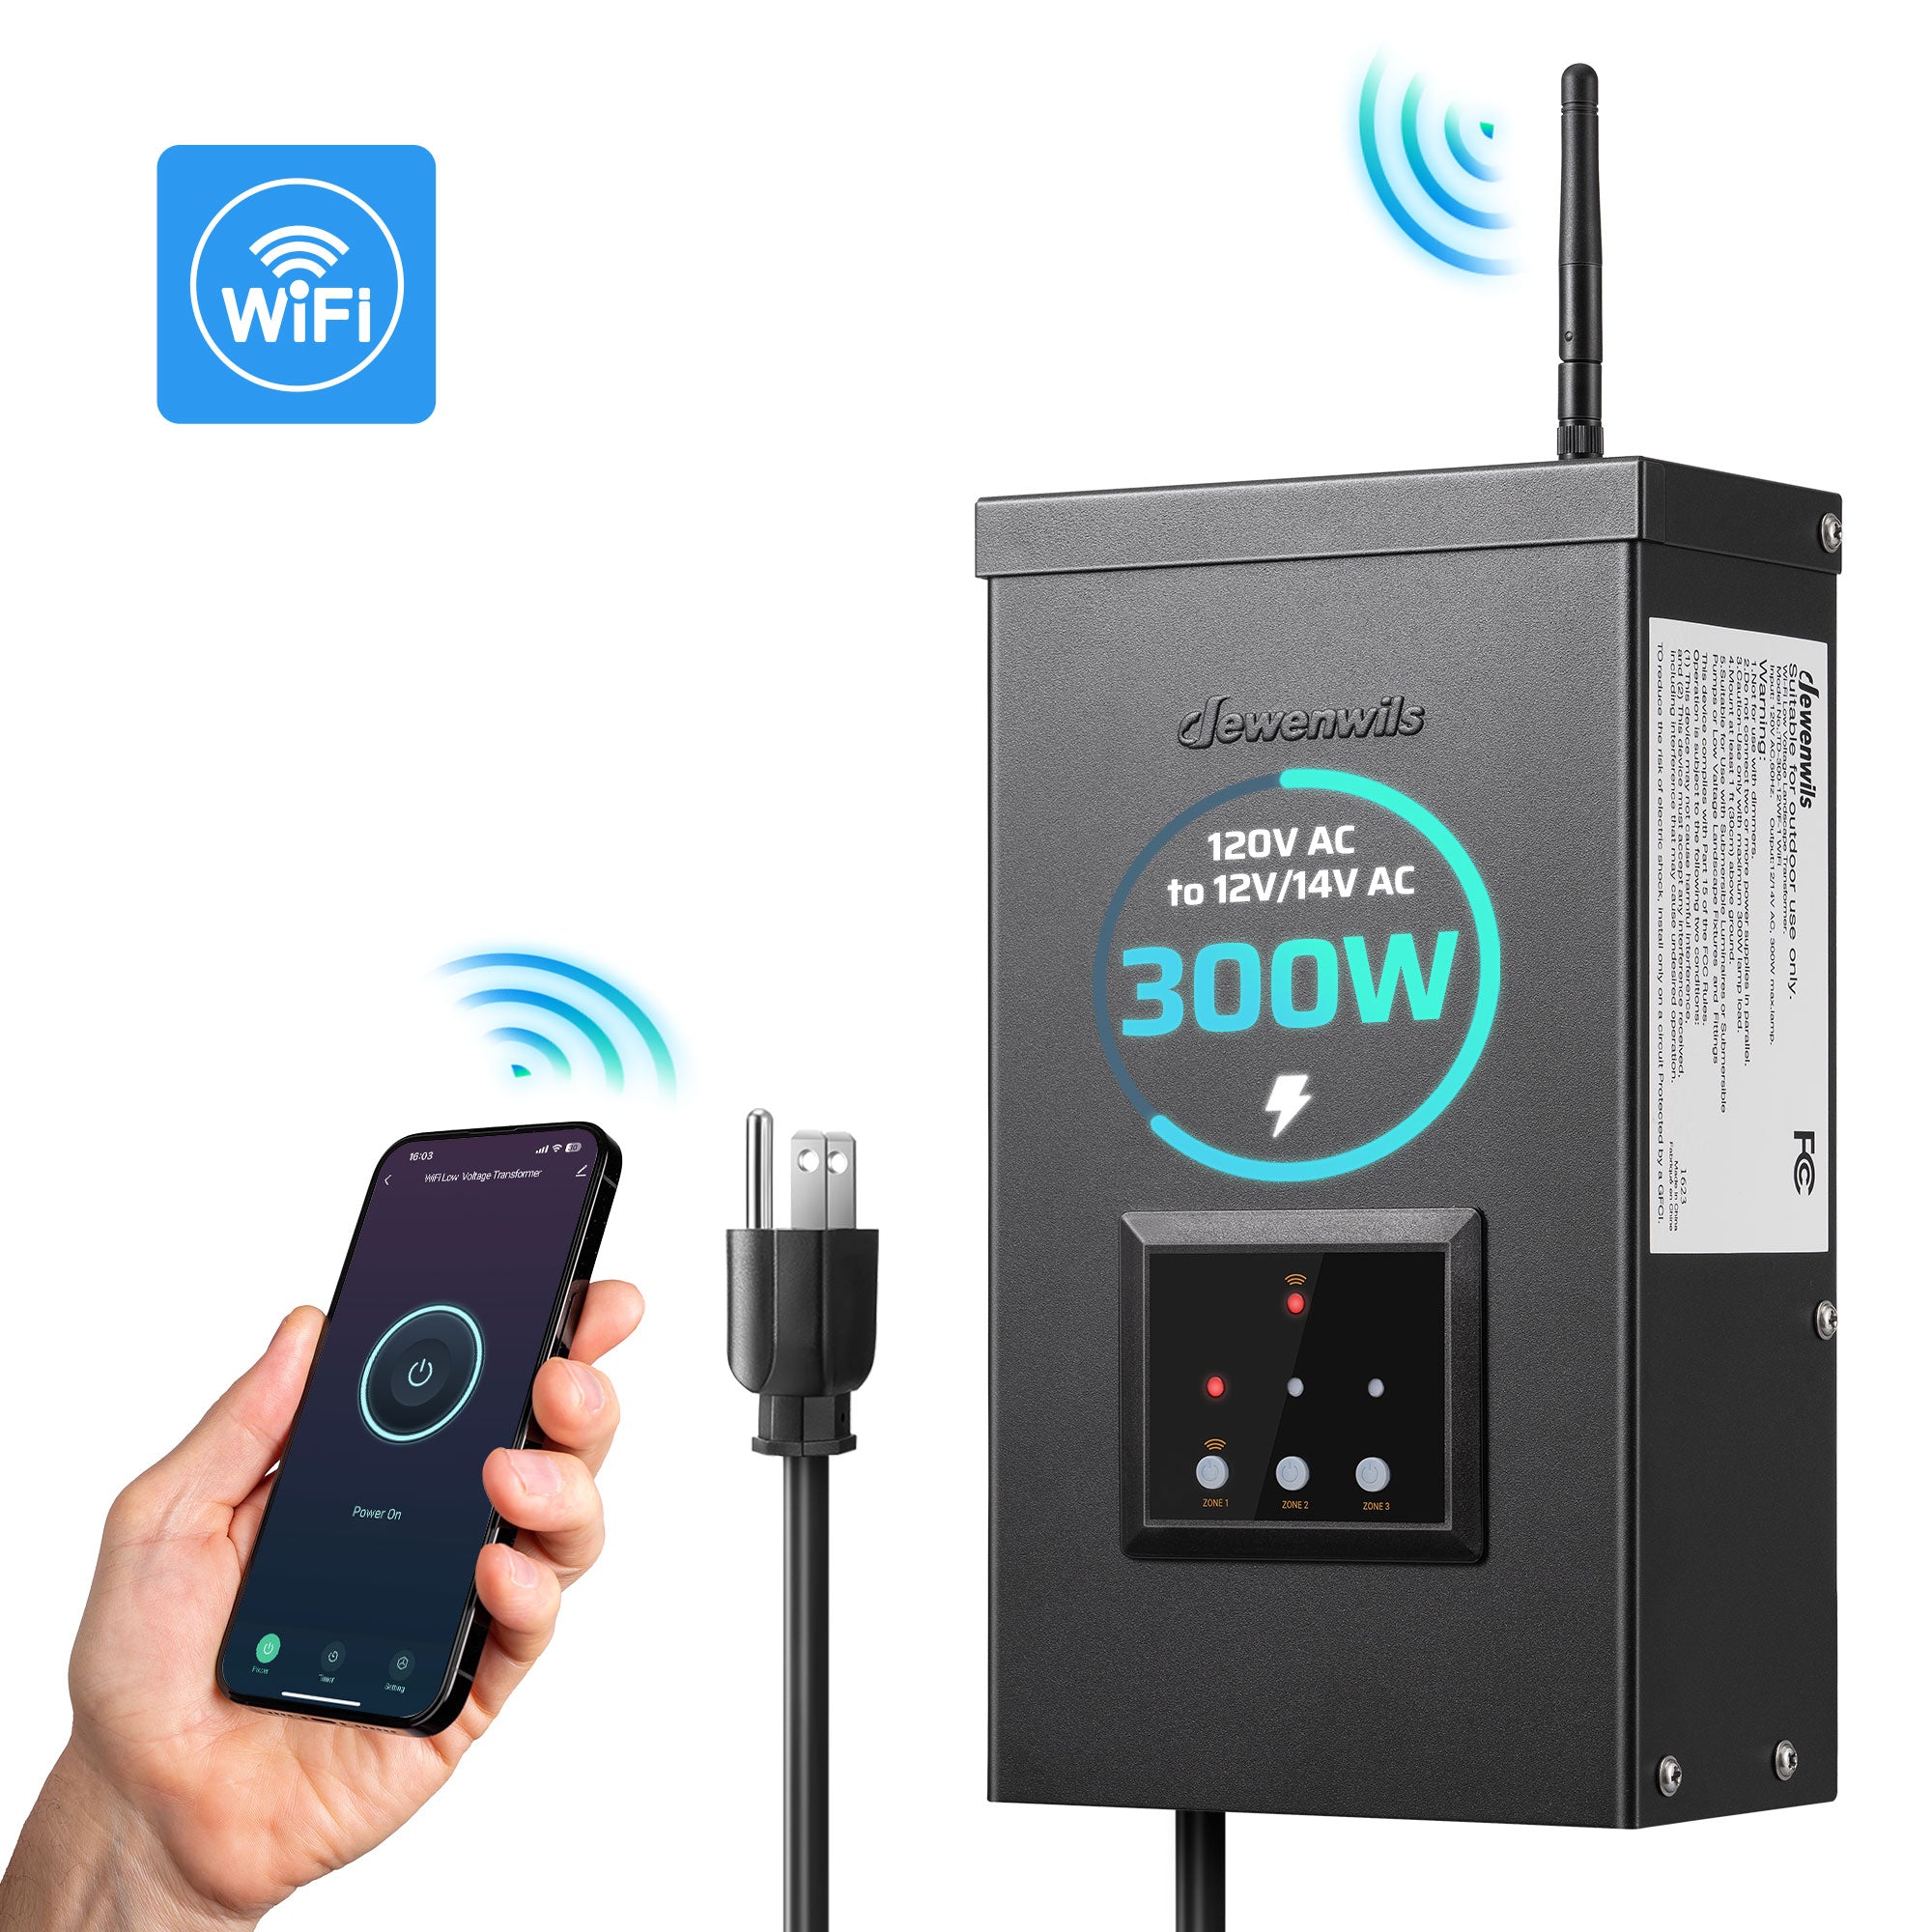 DEWENWILS 300W Wi-Fi Low Voltage Transformer, 3 Independent 